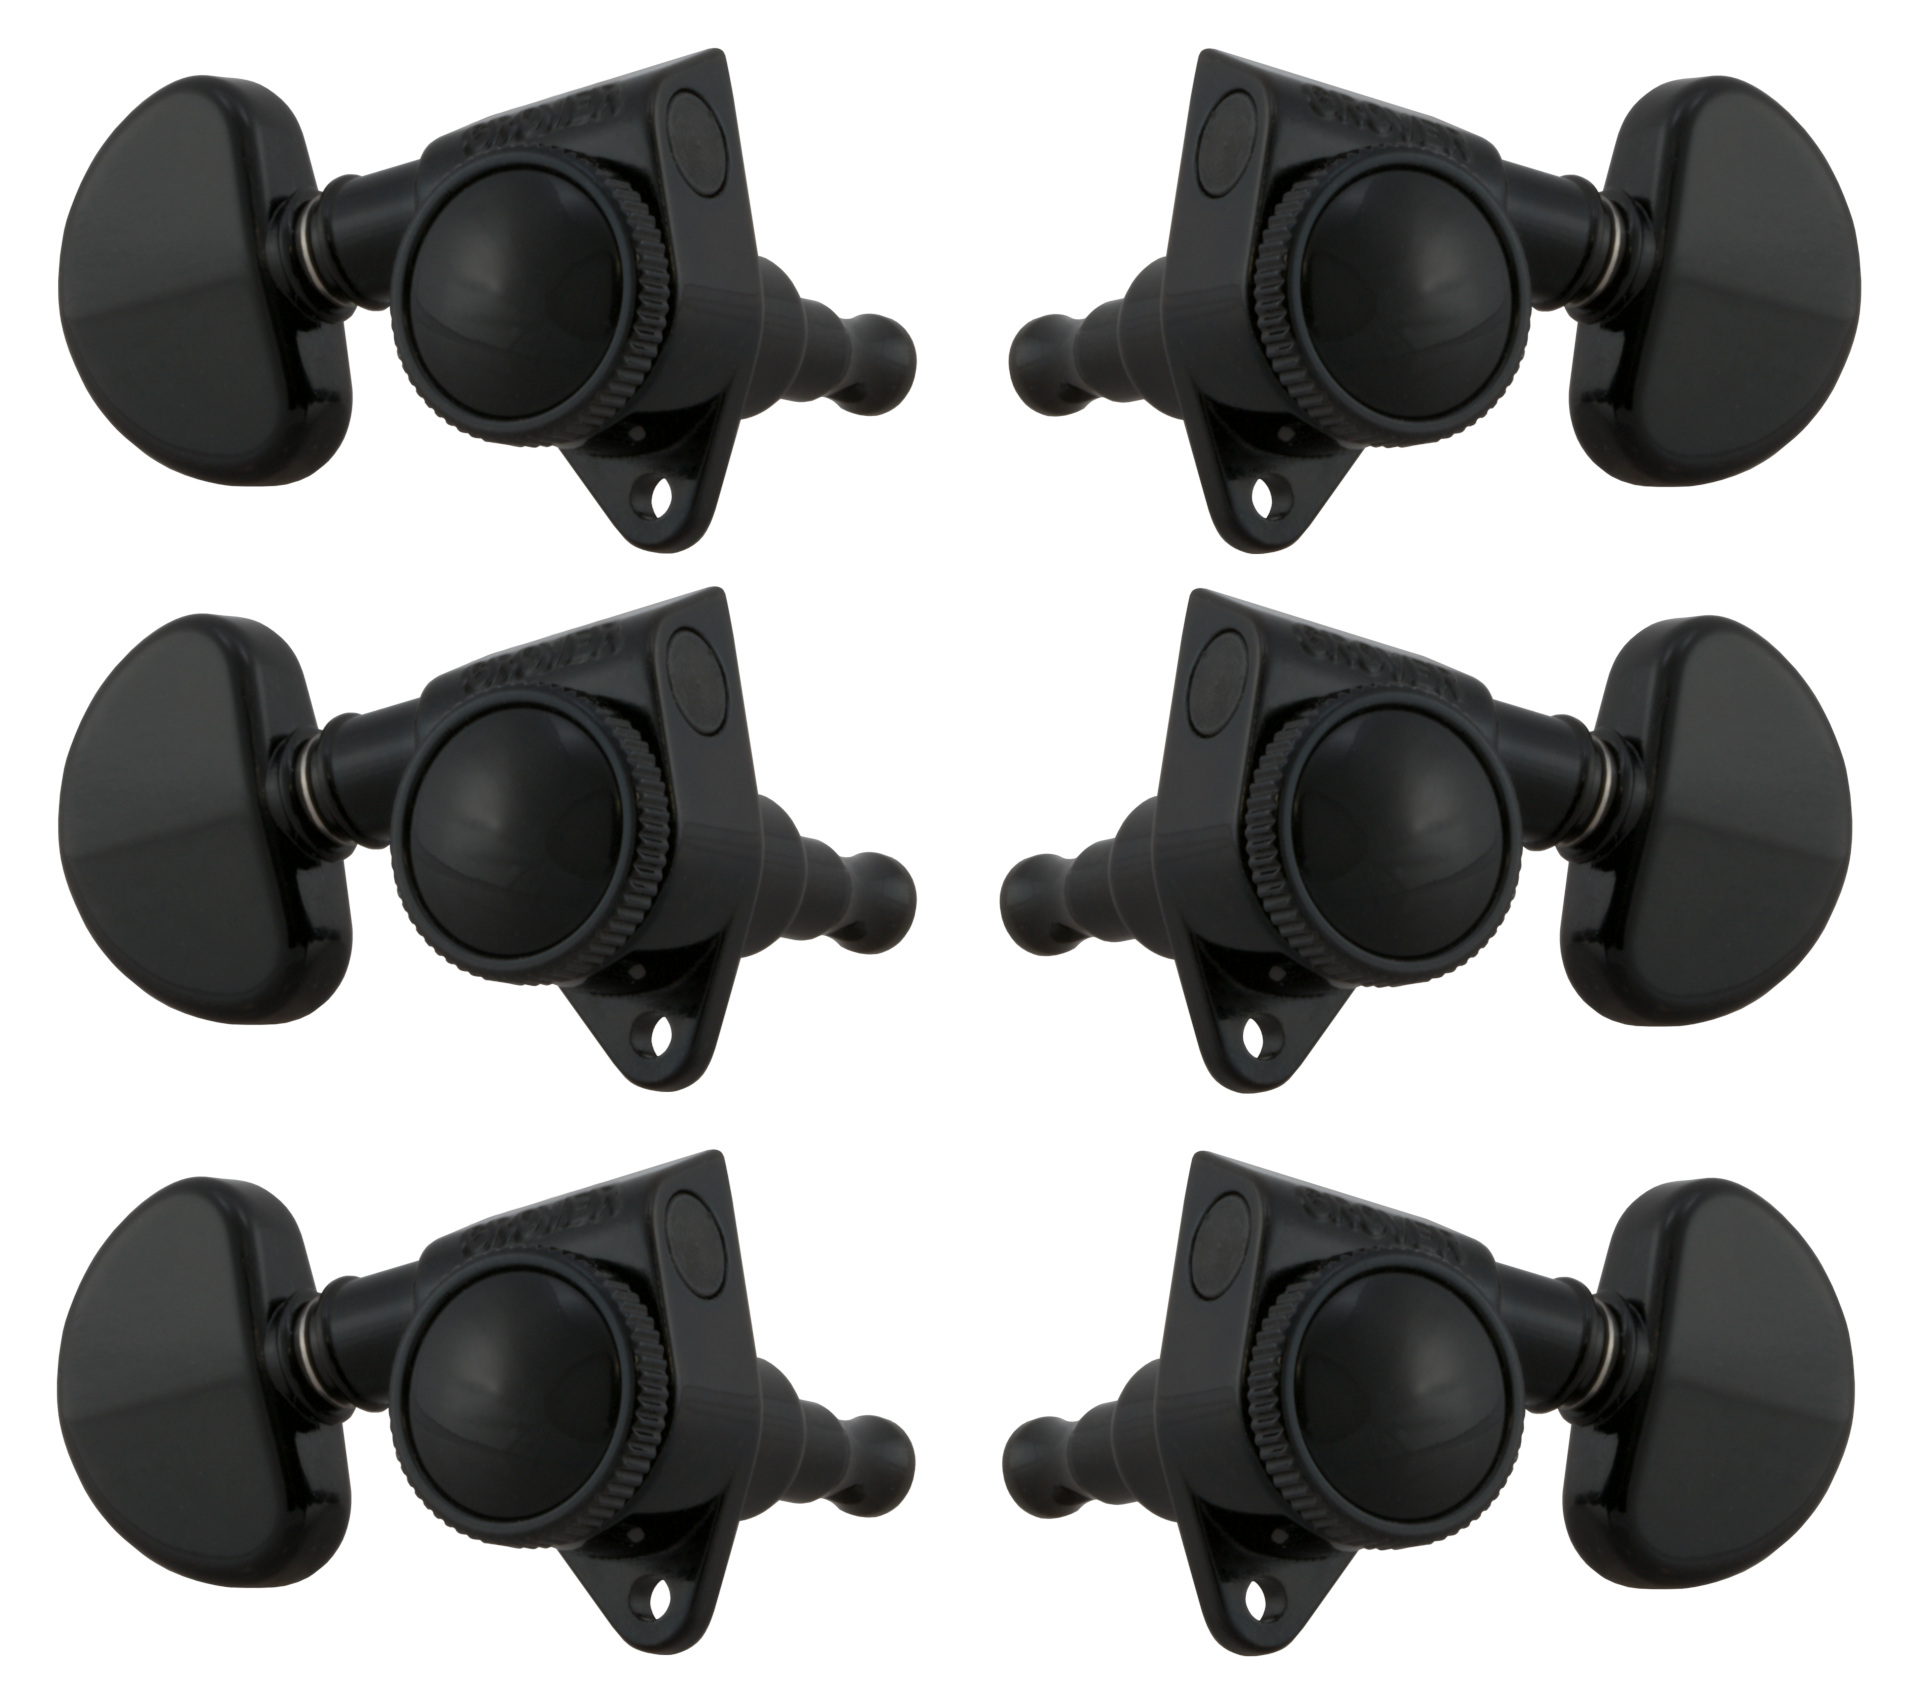 Grover 502BC Roto-Grip Locking Rotomatics with Round Button - Guitar Machine Heads, 3 + 3 - Black Chrome